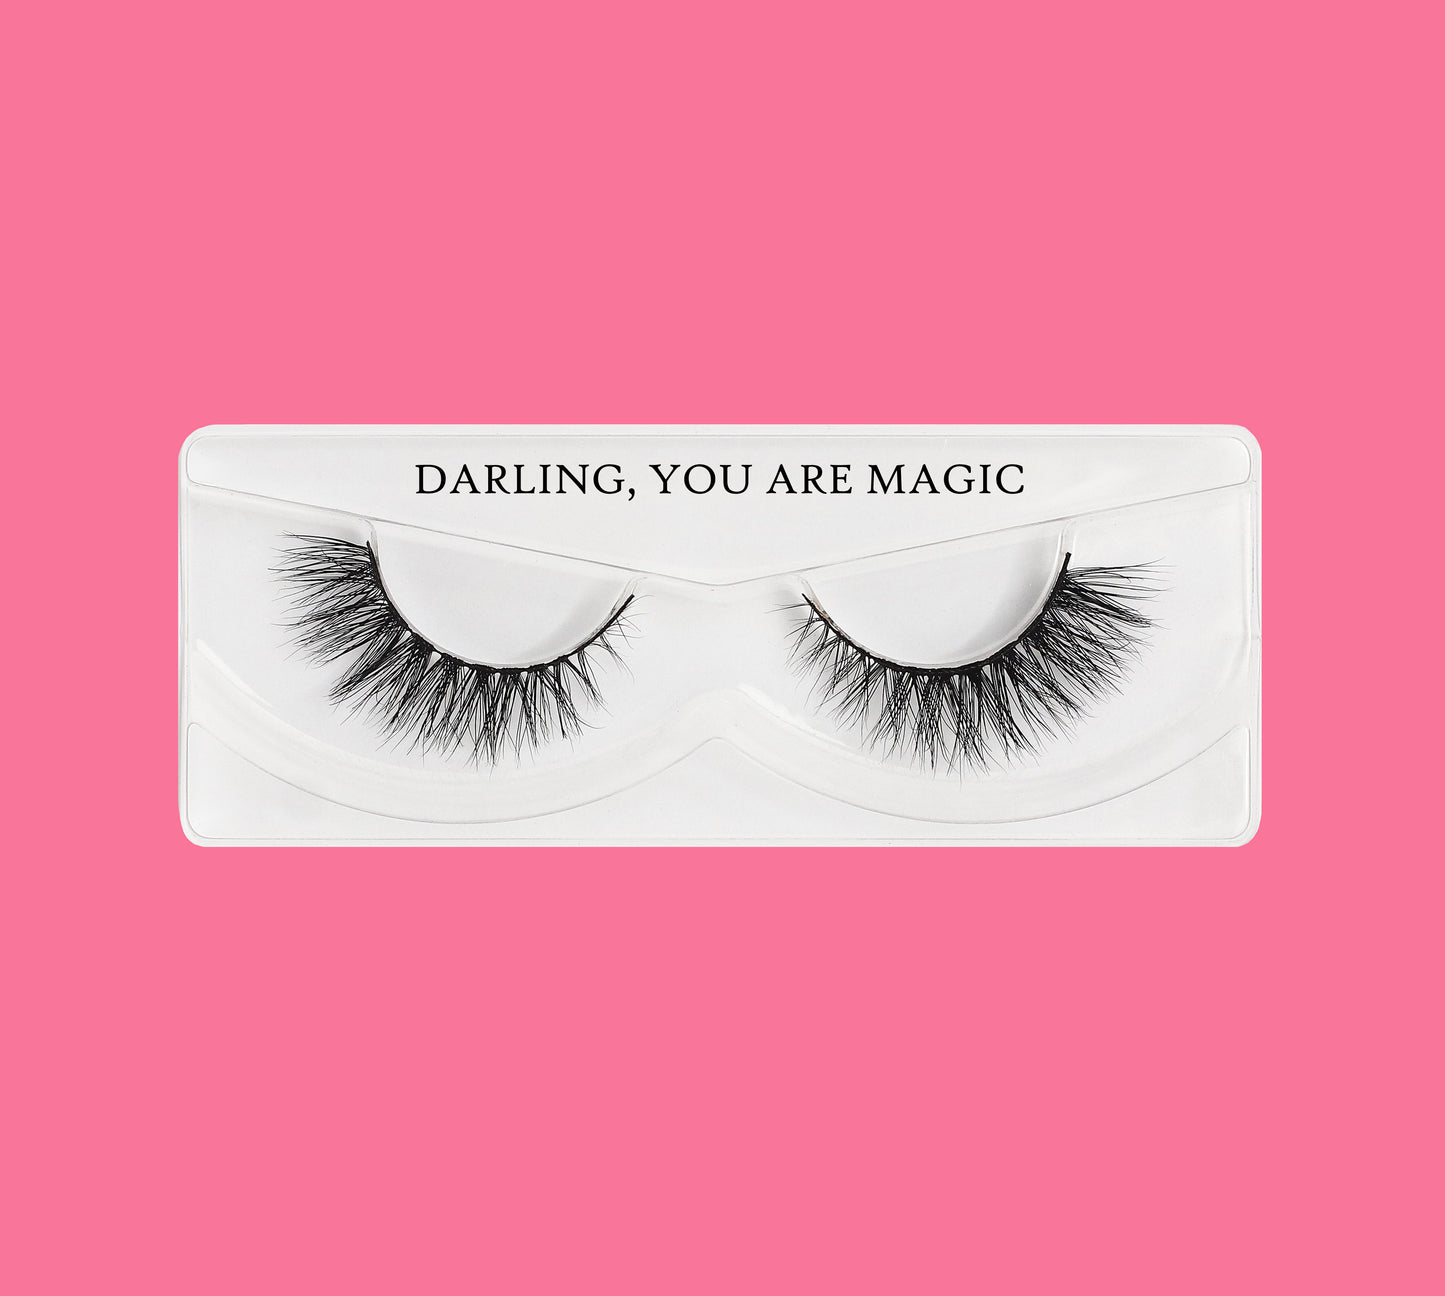 Darling, you are Magic